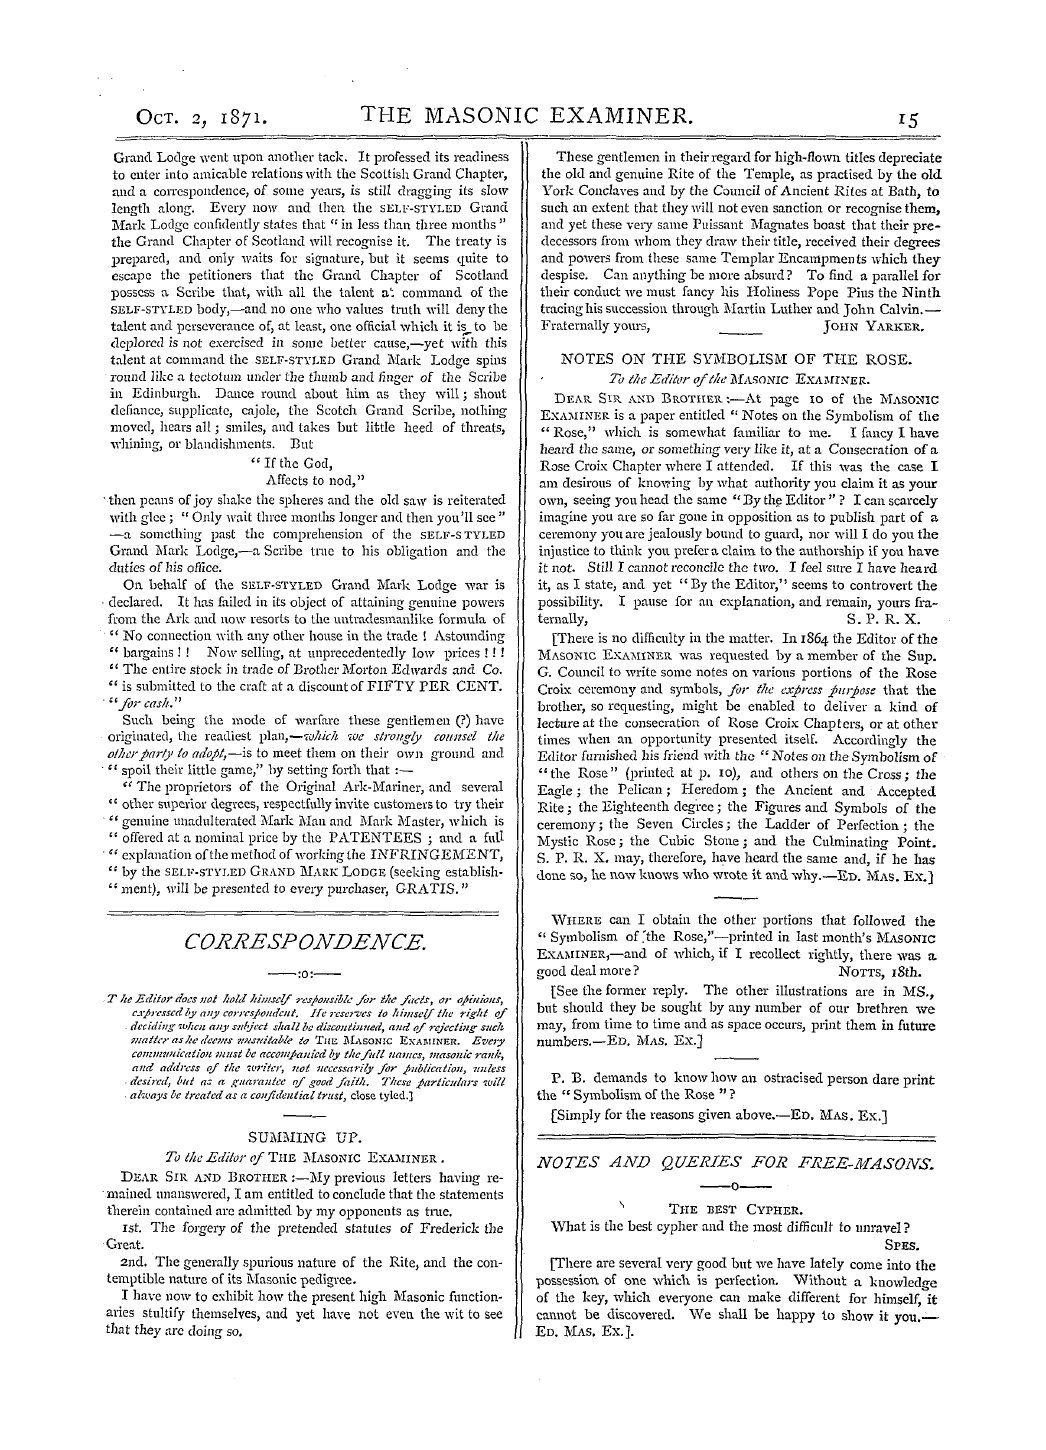 The Masonic Examiner: 1871-10-02 - Correspondence.